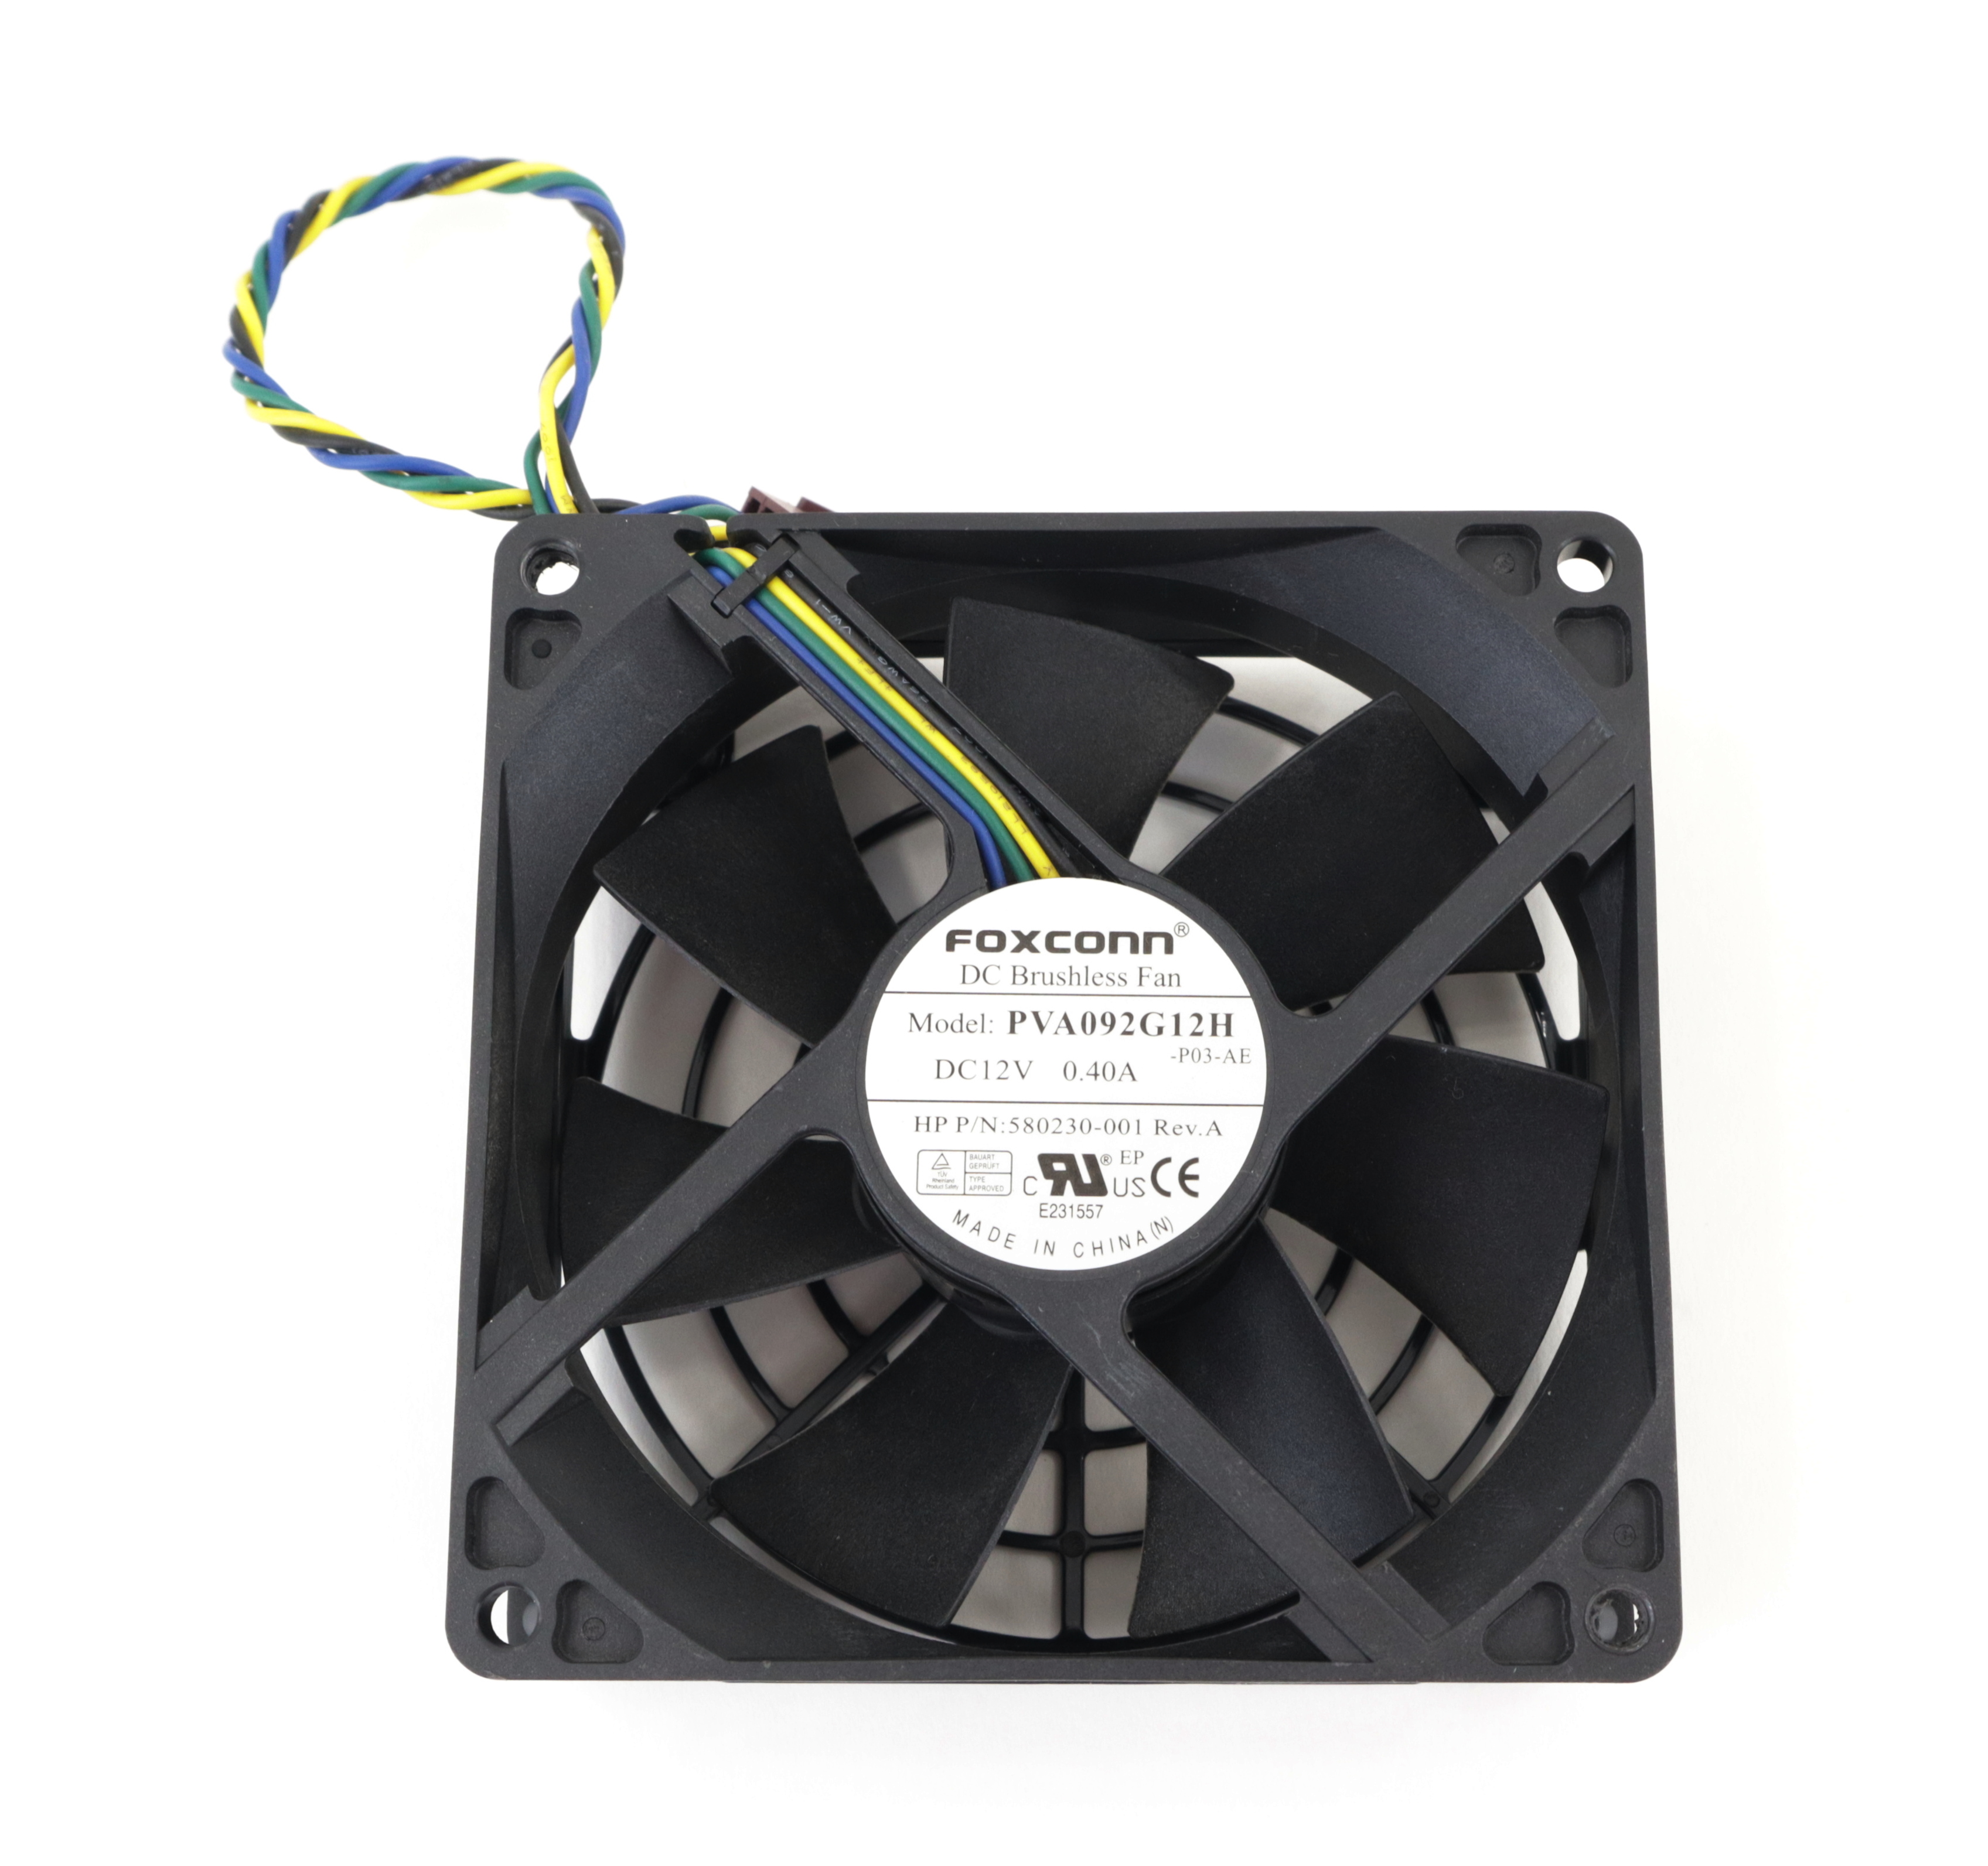 HP Foxconn Cooling Fan PVA092G12H-P03-AE DC 12V 0.4A 92mm 4pin 4-Wire 580230-001 - Click Image to Close